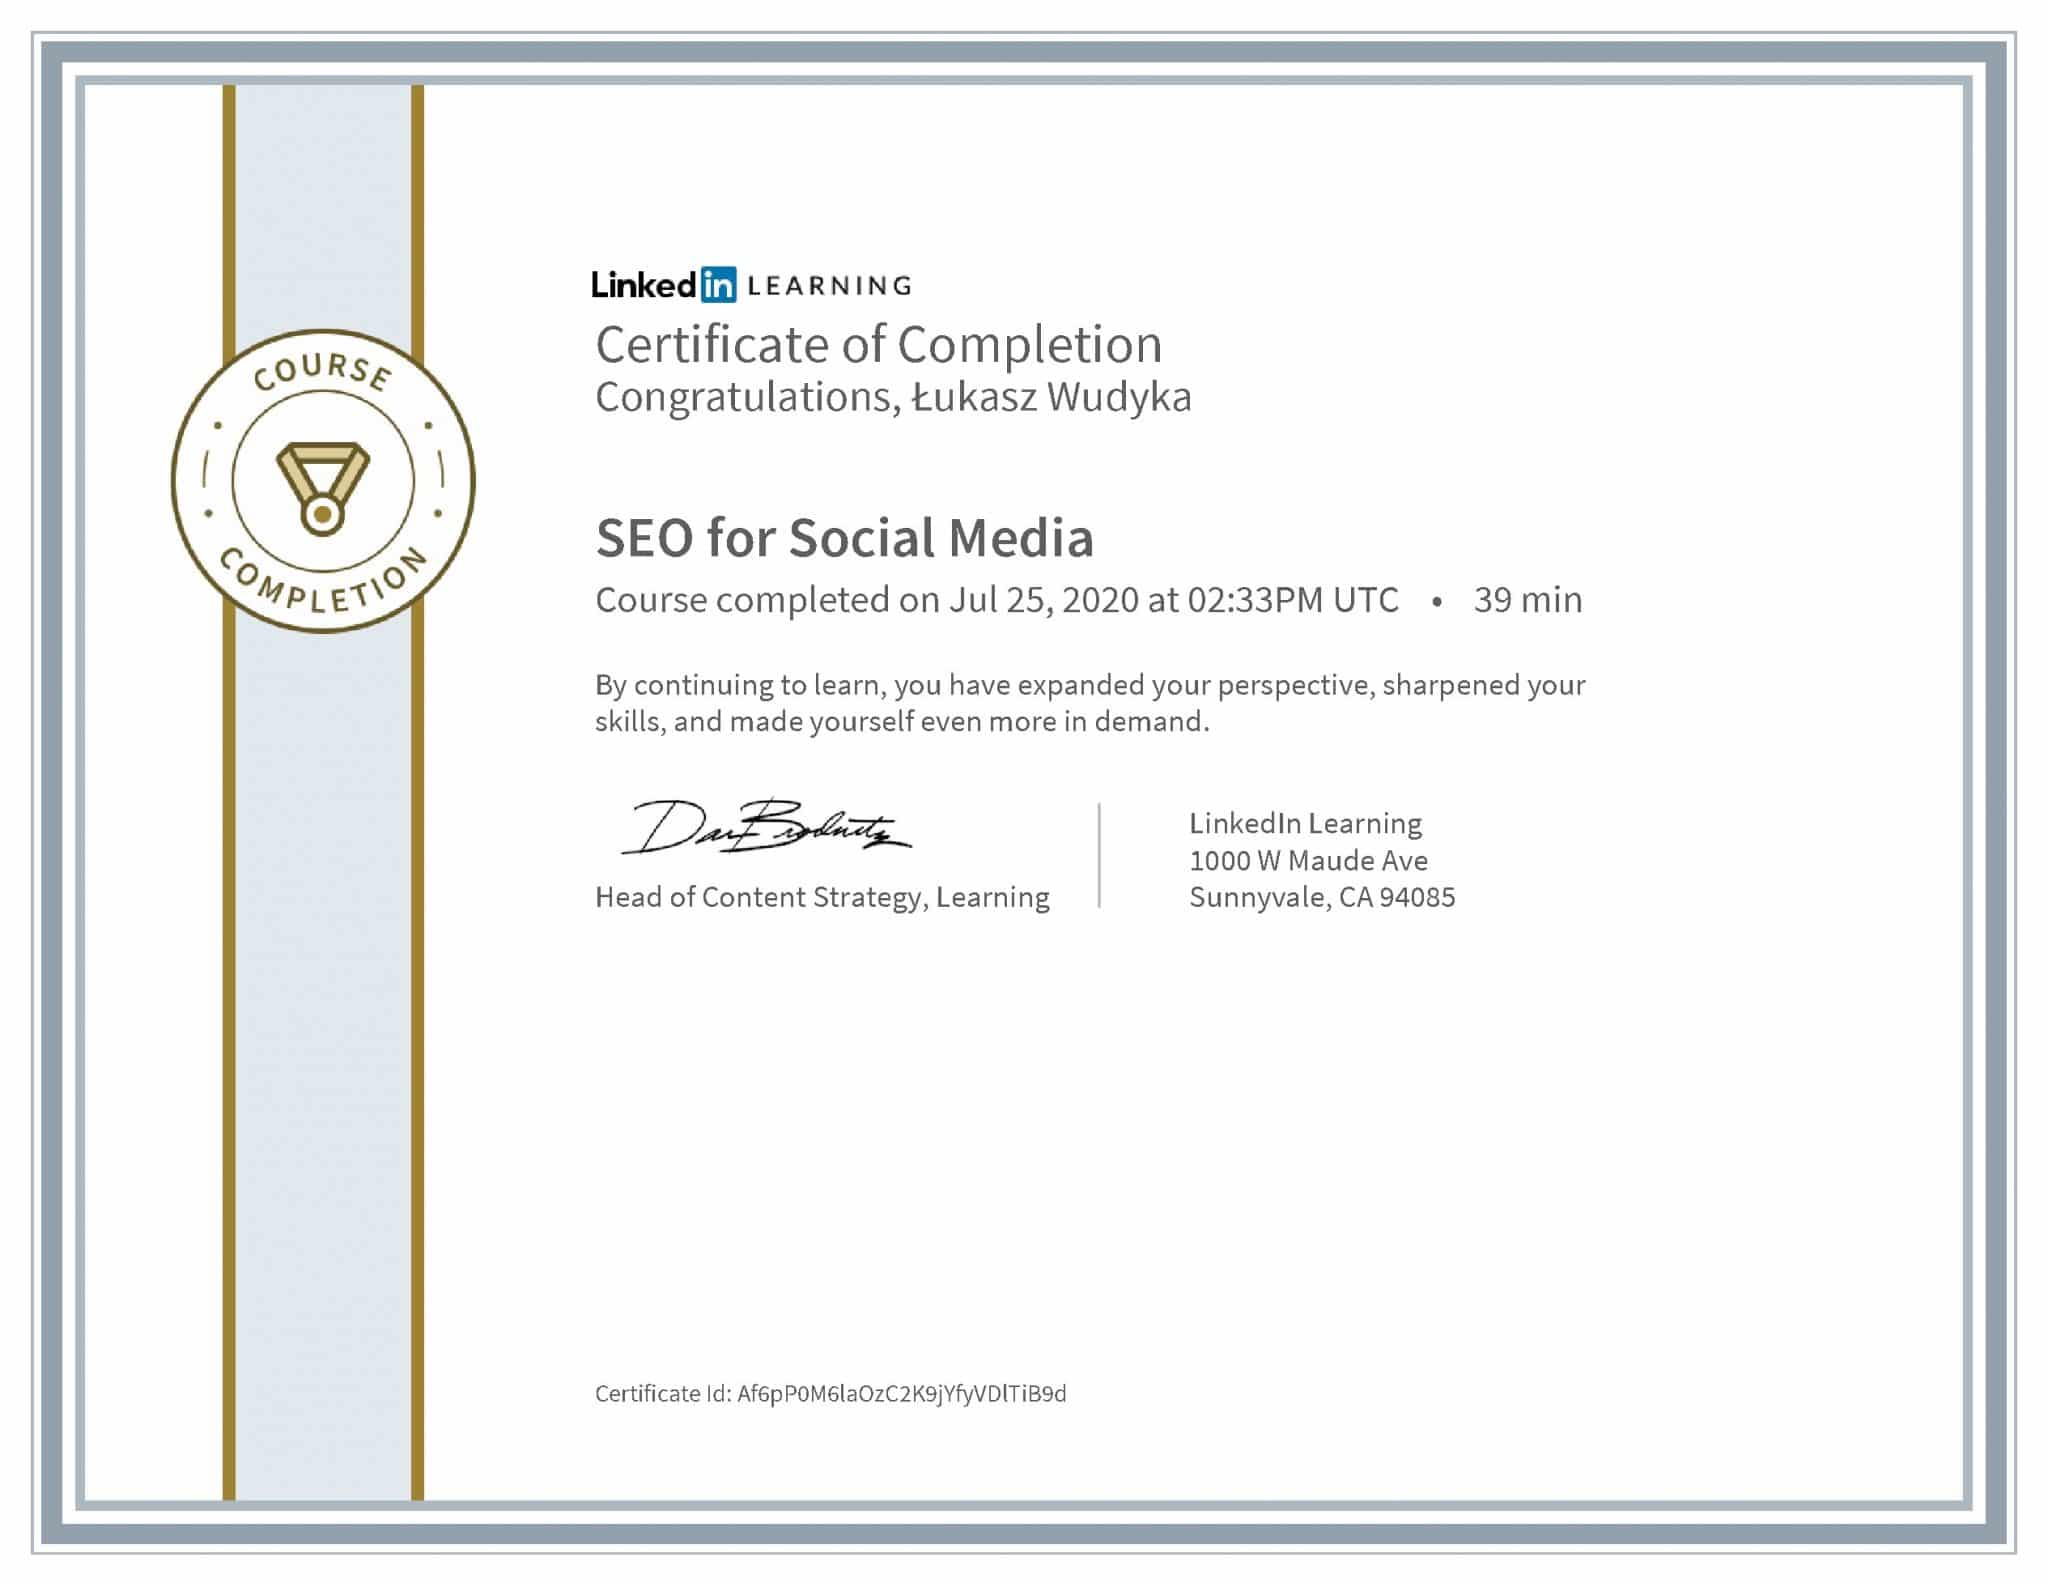 Łukasz Wudyka certyfikat LinkedIn SEO for Social Media